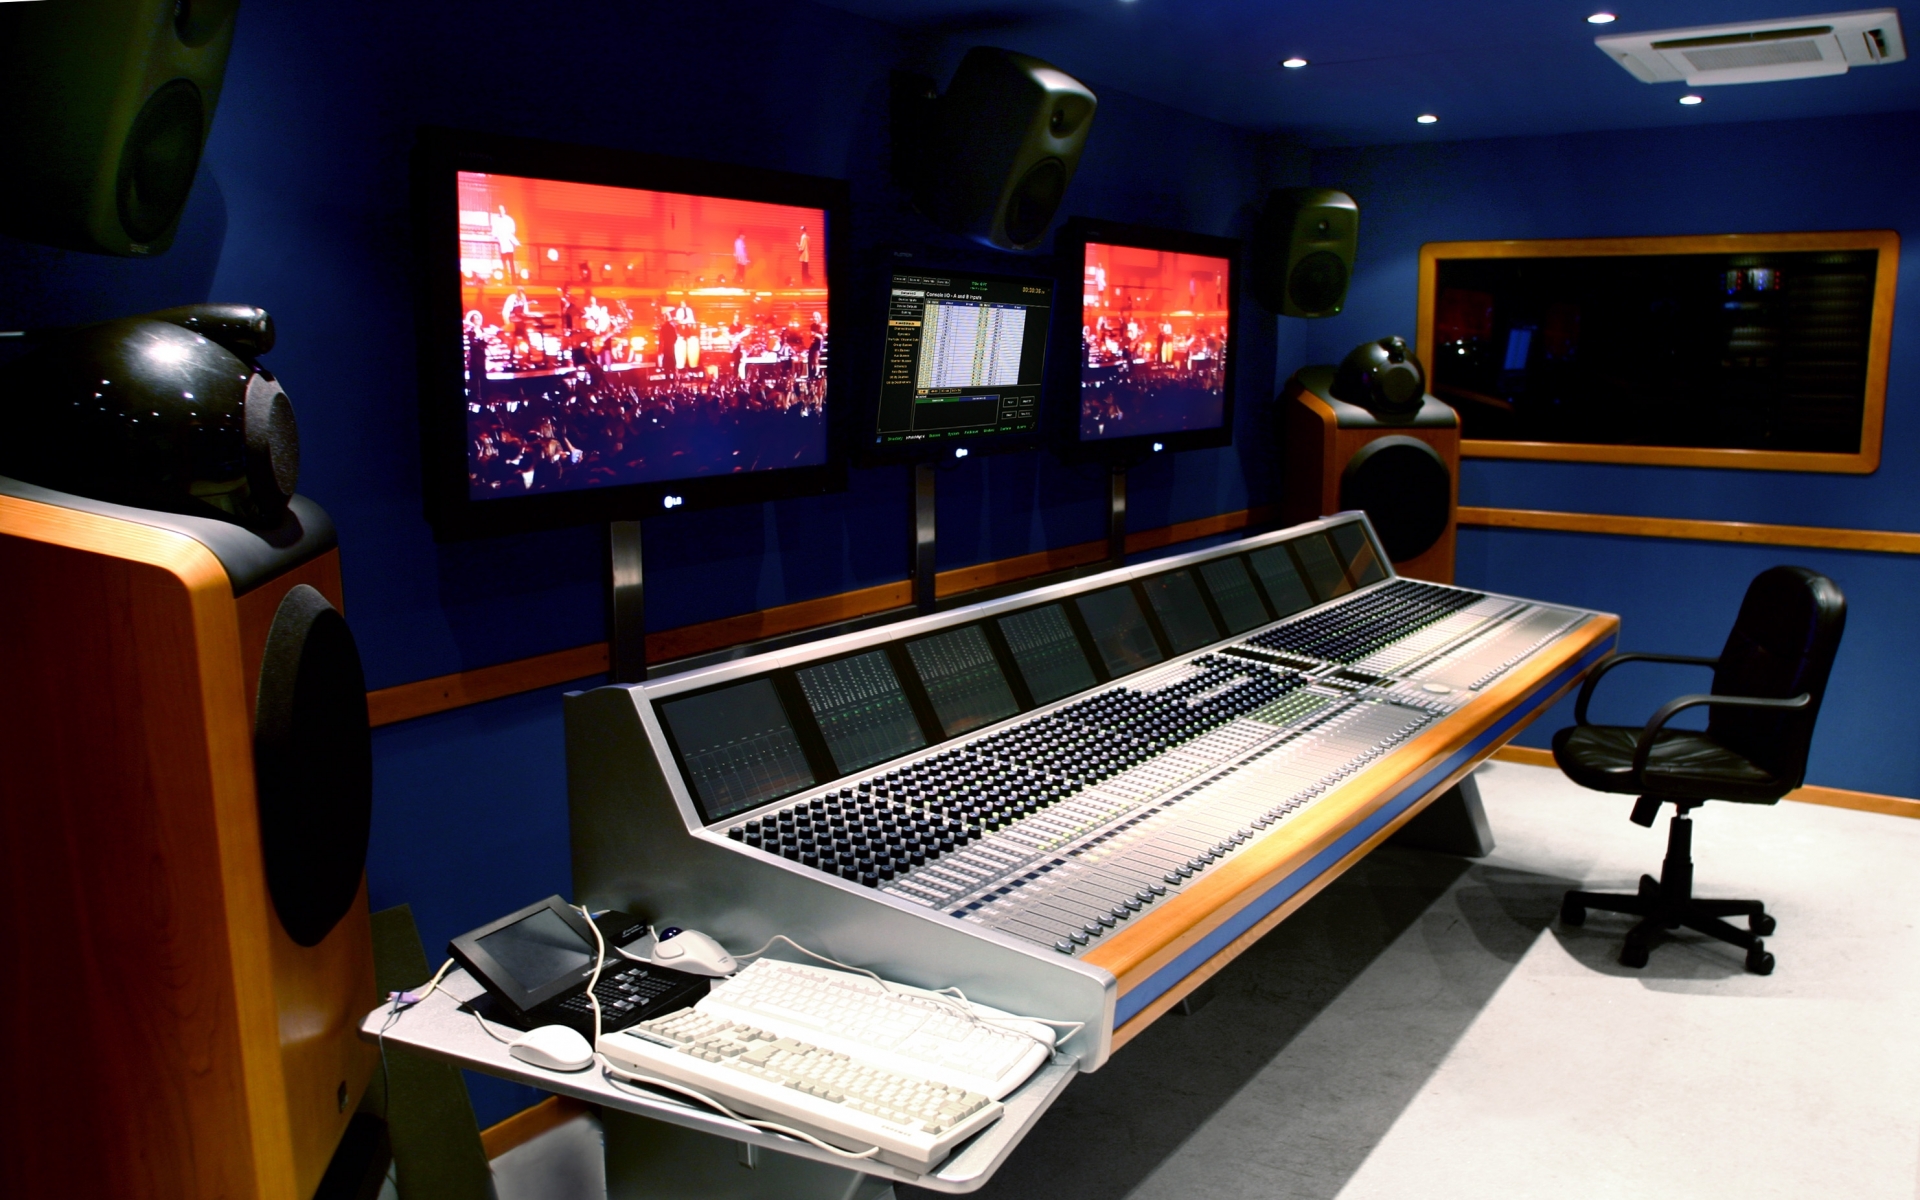  46 Music  Recording Studio  HD Wallpaper  on WallpaperSafari